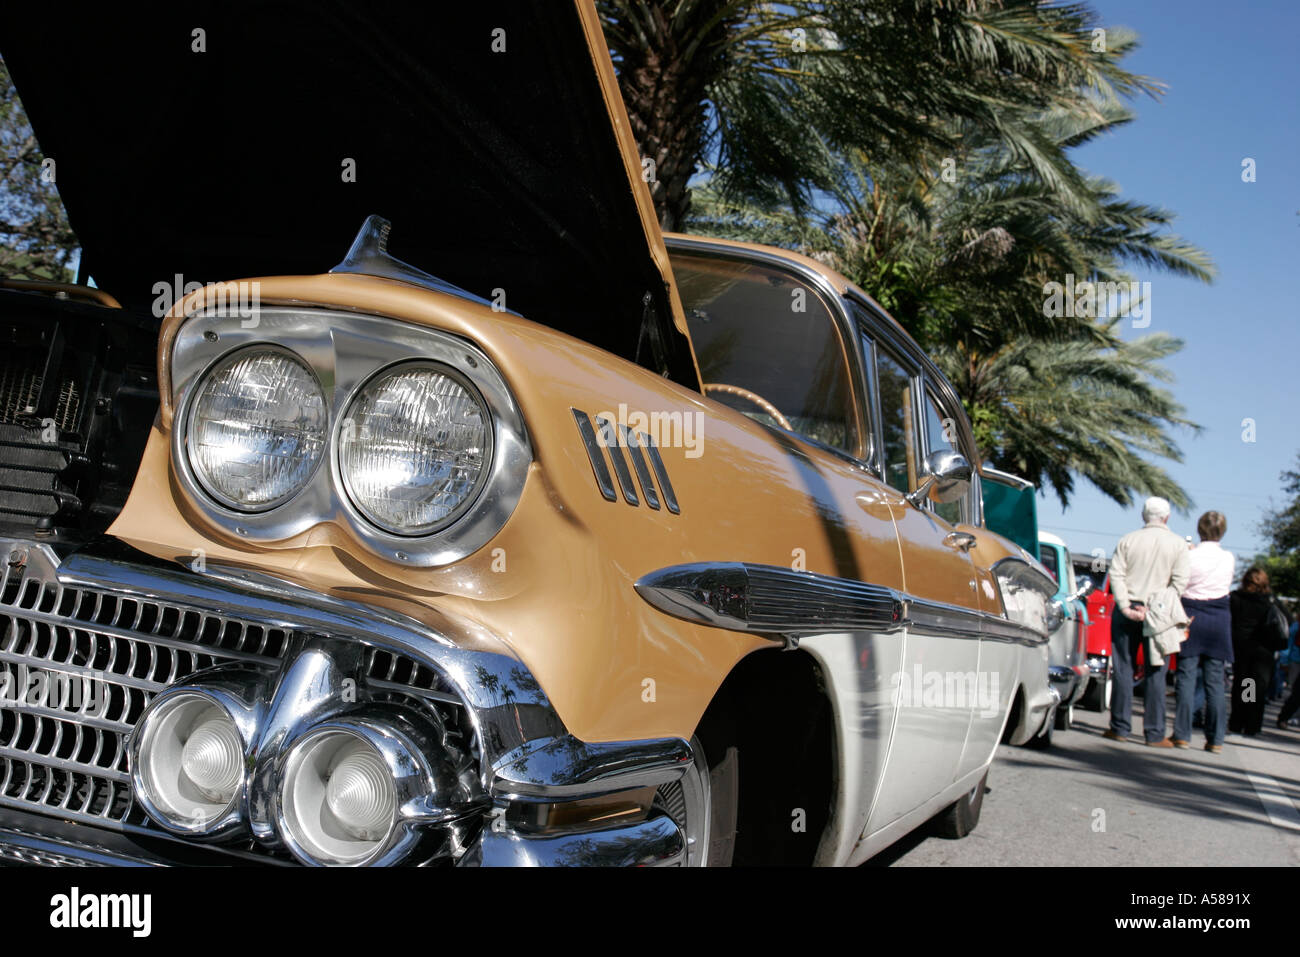 Miami Florida,Coral Gables,Classic car cars Show,collectors,nostalgia nostalgic retro,investment,restore,hobby,Americana,1958 Chevrolet,visitors trave Stock Photo